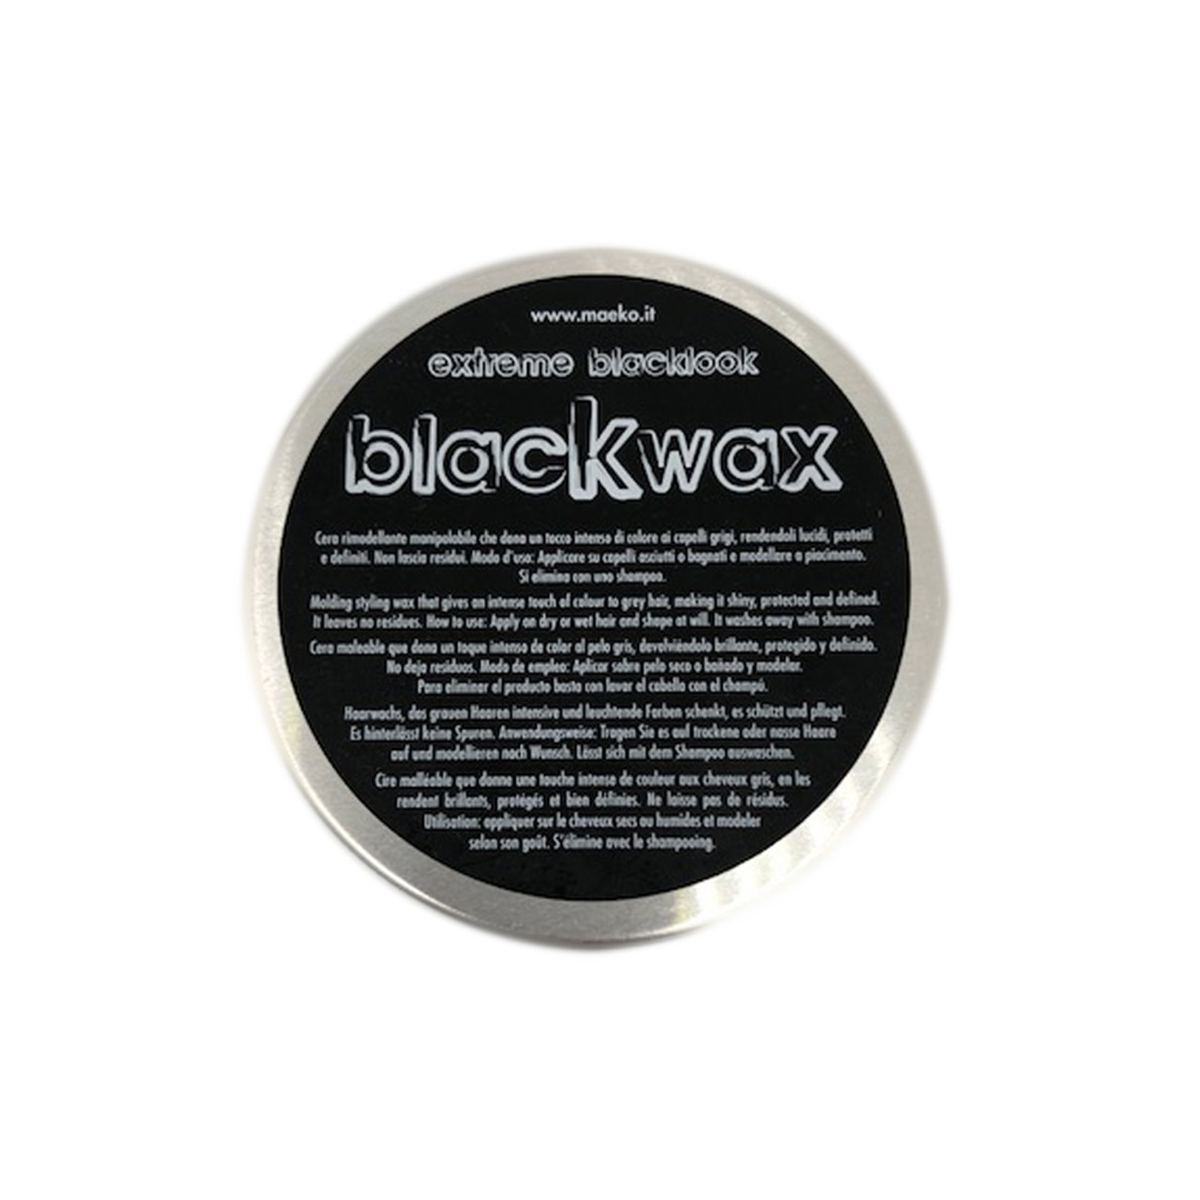 MAEKO' - EXTREME BLACKLOOK - BLACK WAX (100ml) Cera rimodellante